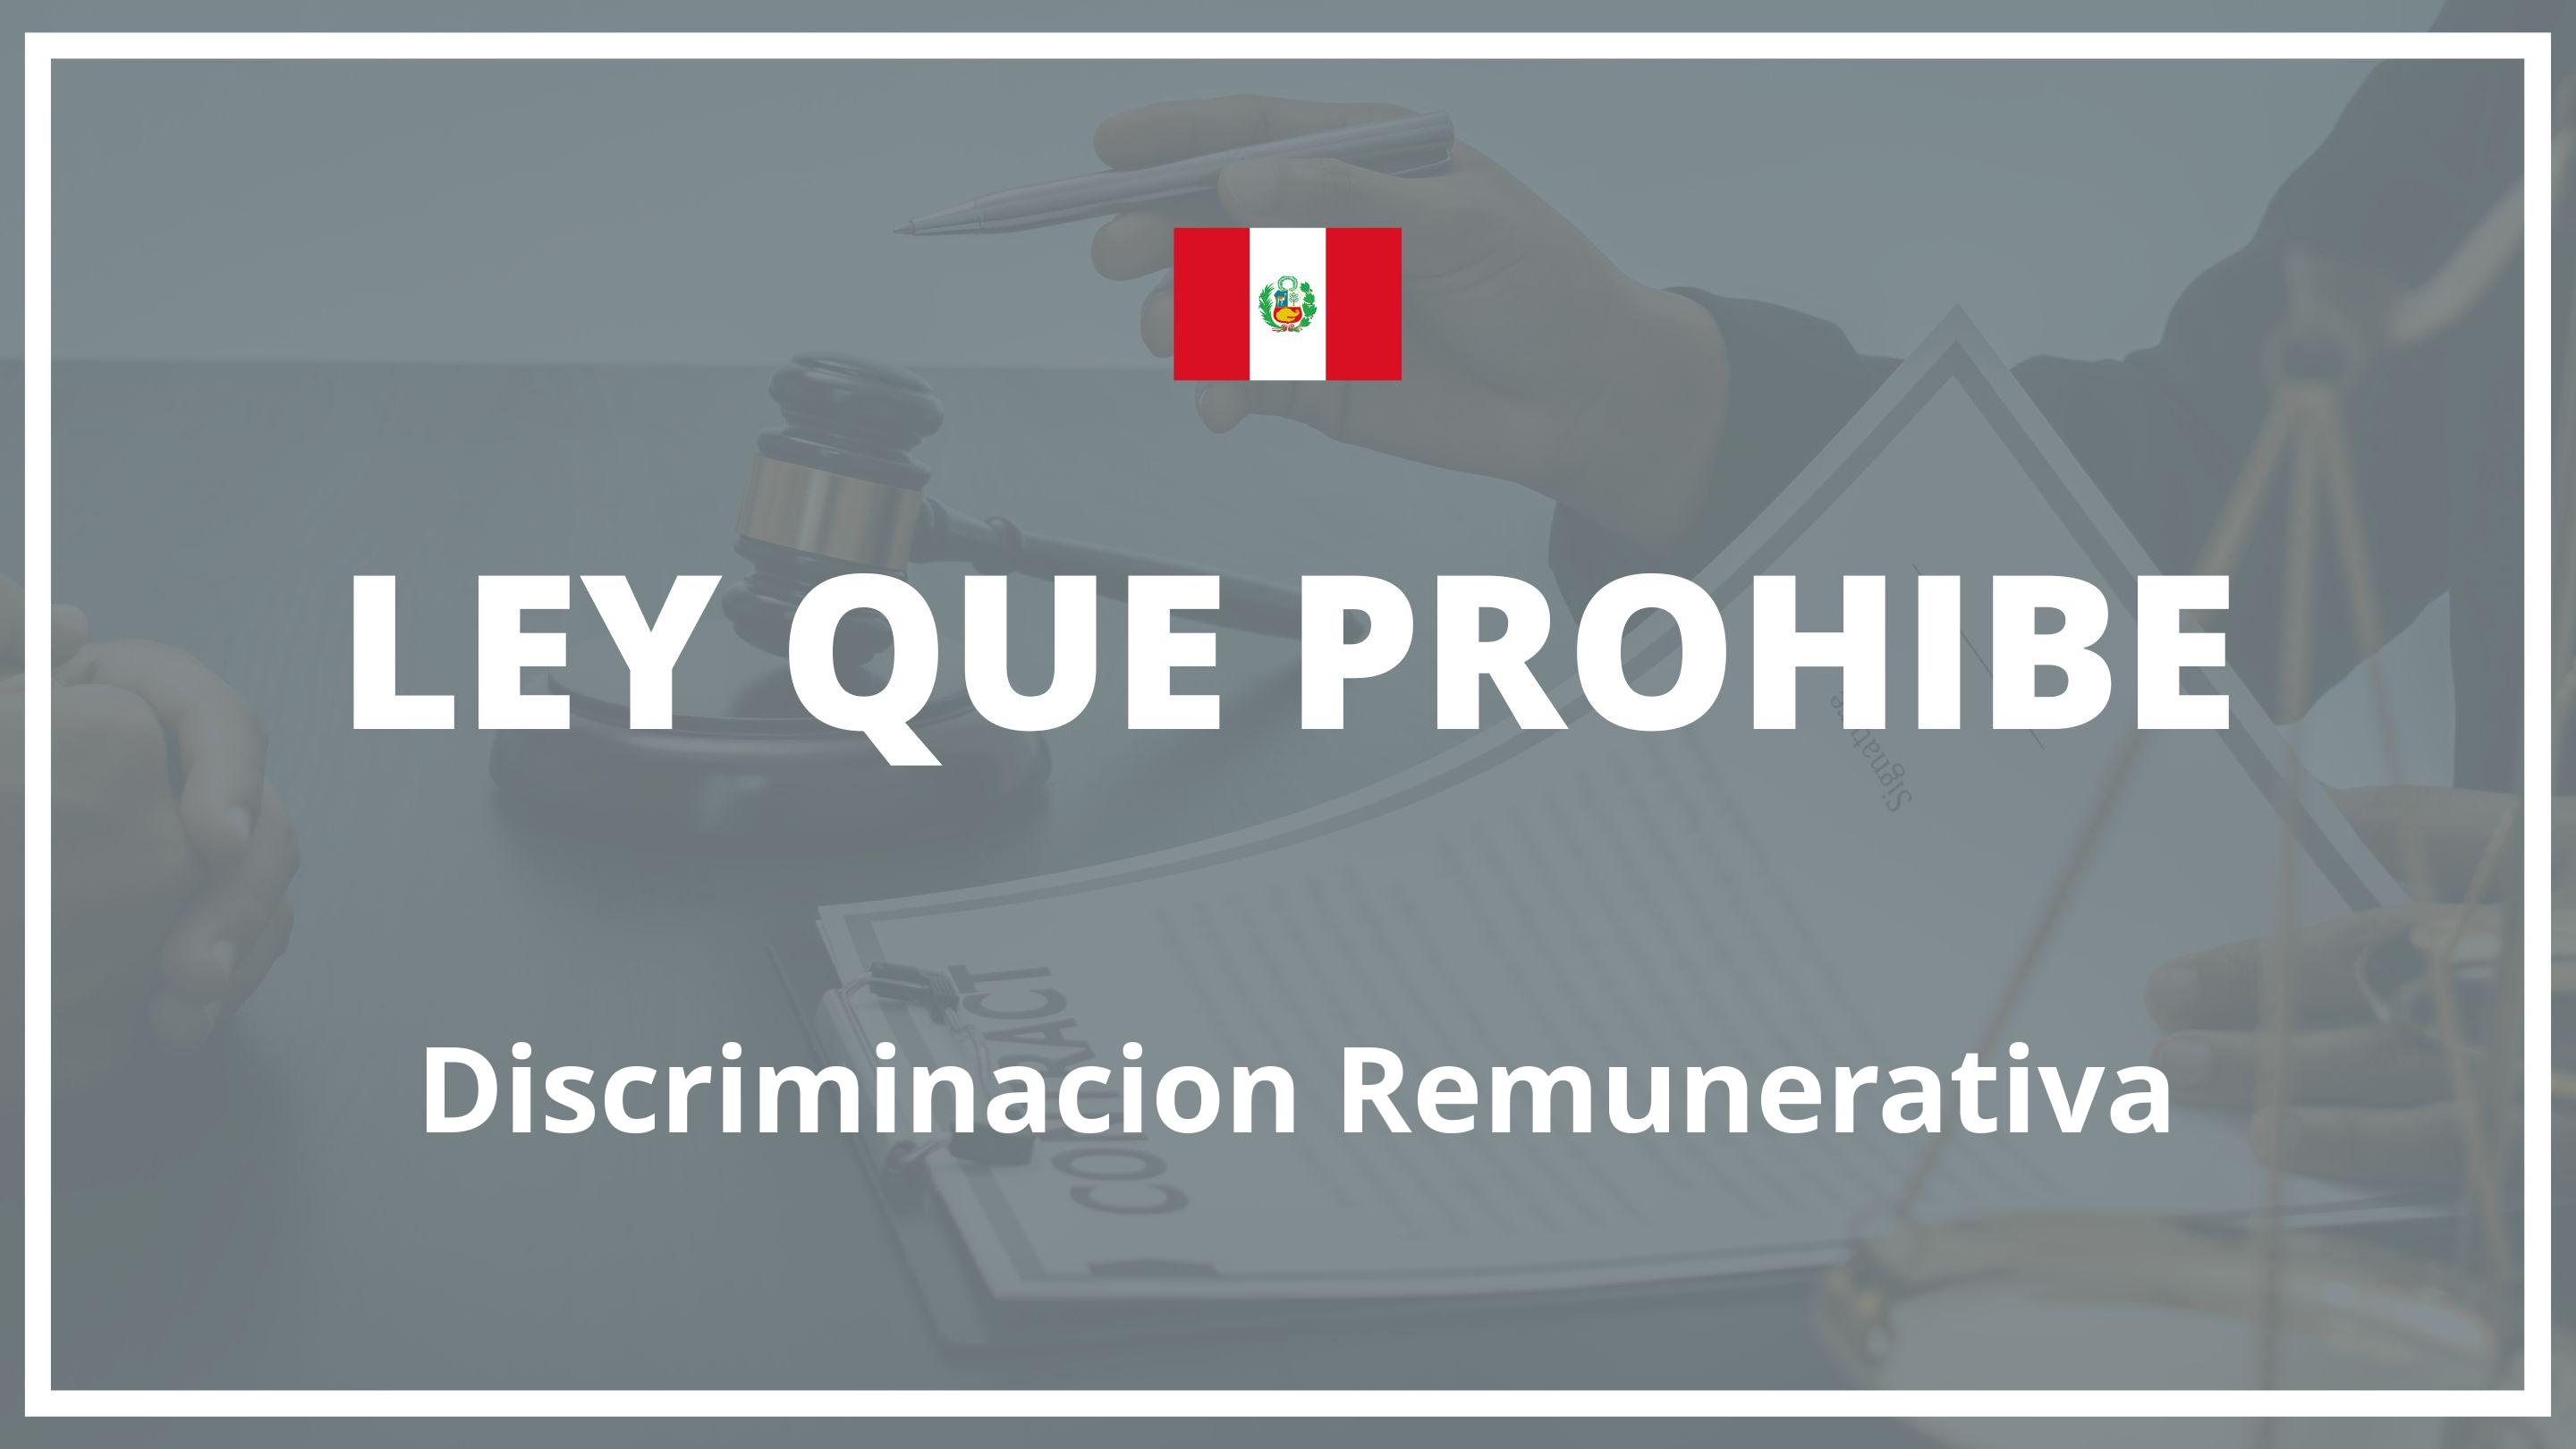 Ley que prohibe discriminacion remunerativa Peru